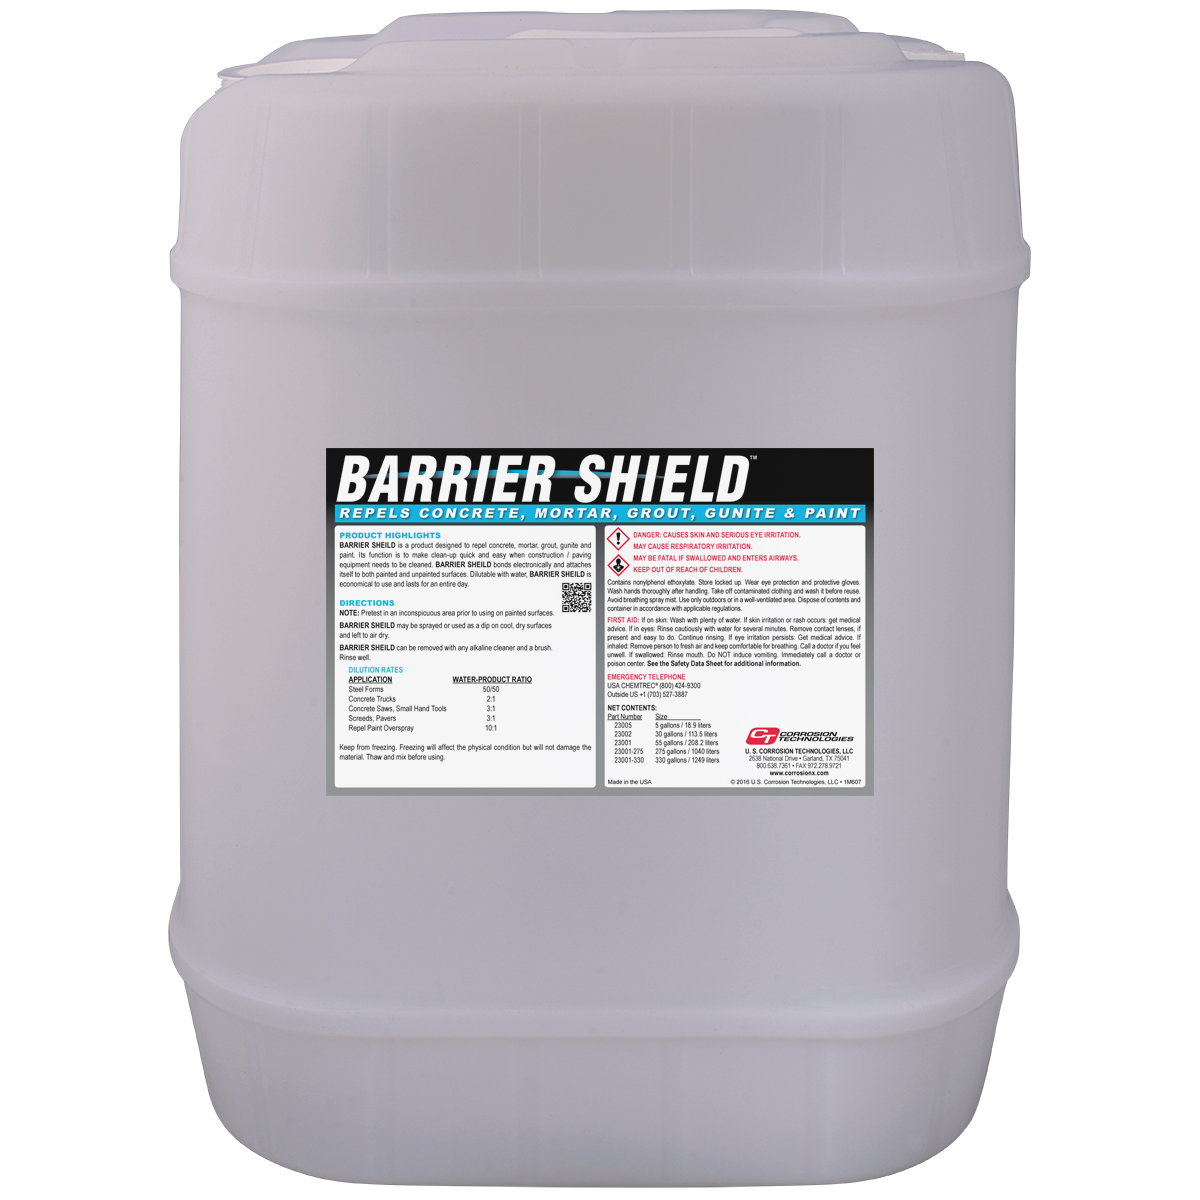 Barrier Shield concrete repellent coating